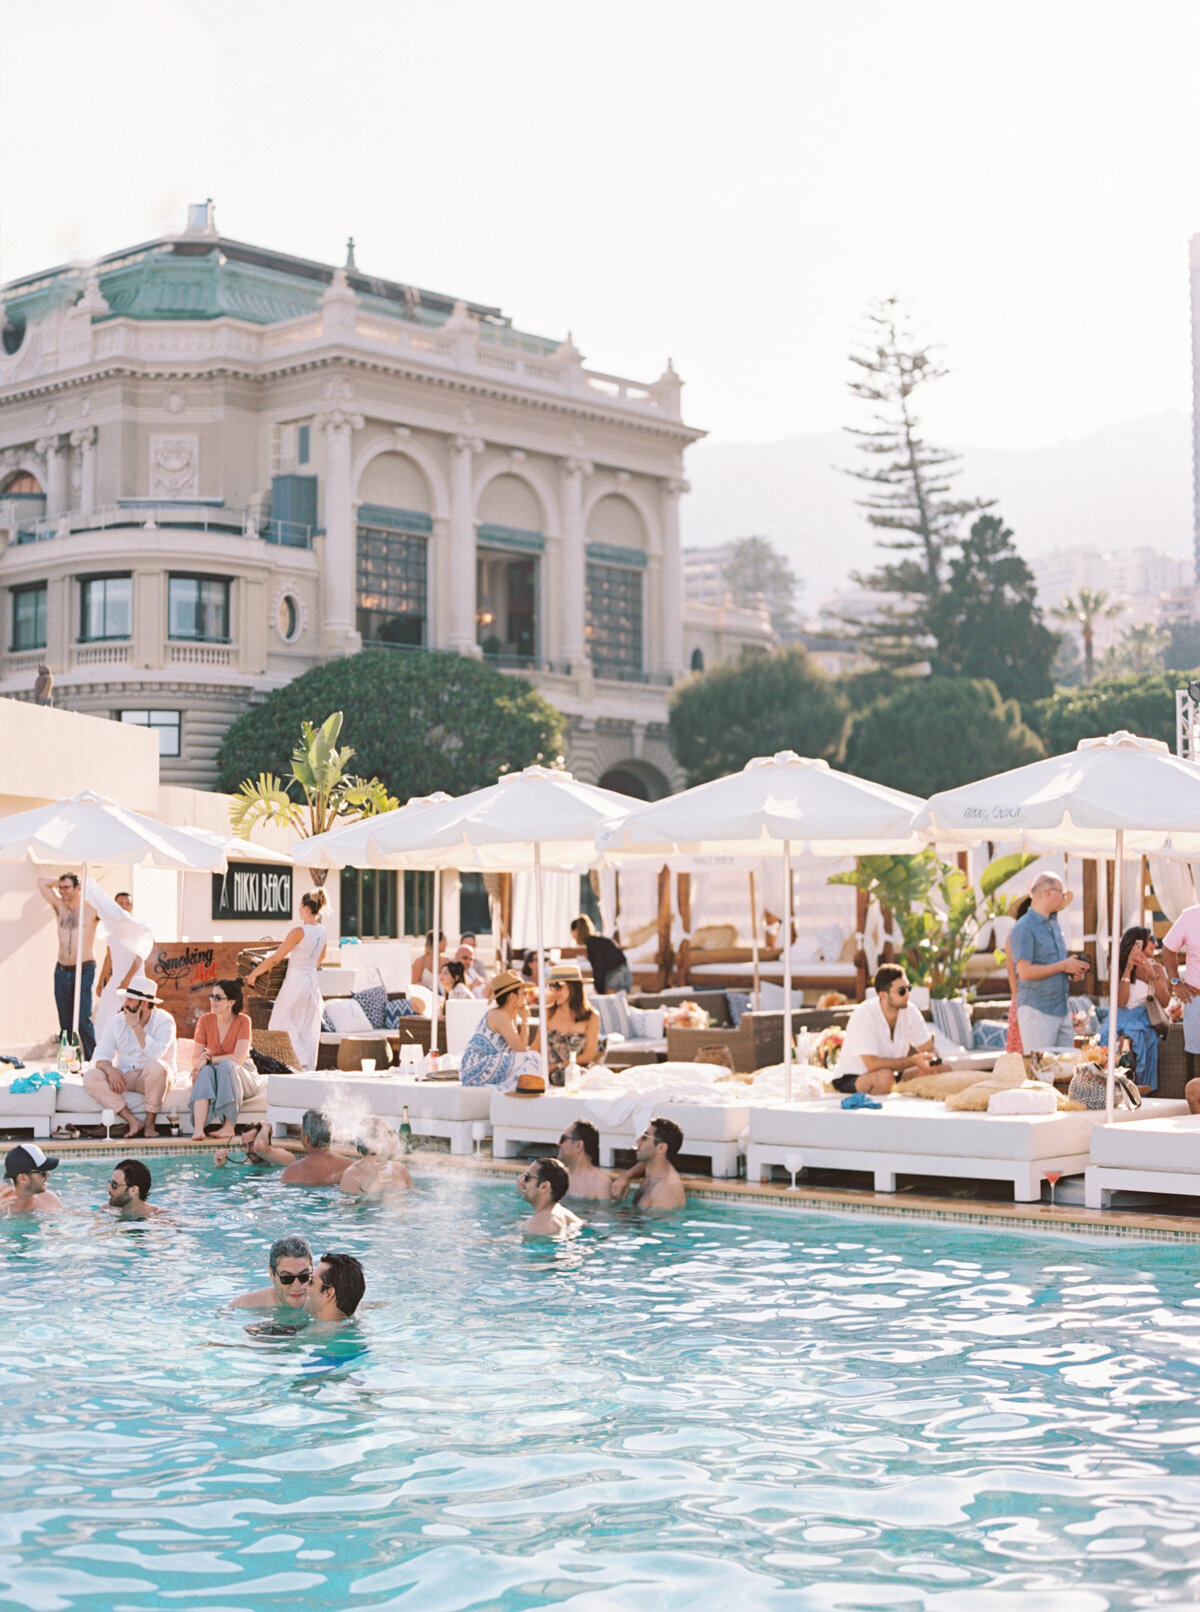 Nikki-Beach-Club-Pool-Monaco-Nice-Saint Tropez-Welcome-Dinner-Katie-Grant-destination-wedding (21 of 22).jpg